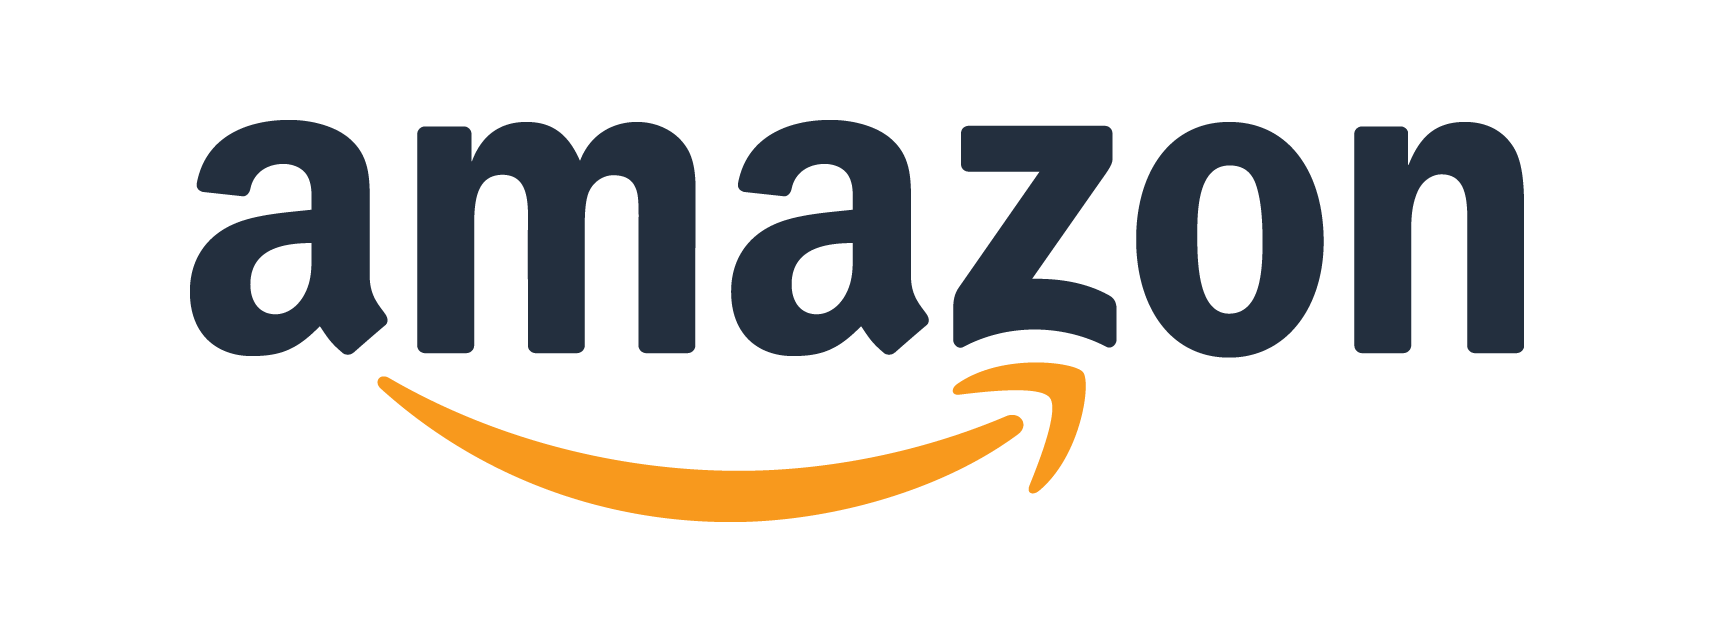 Amazon-logo-RGB.png